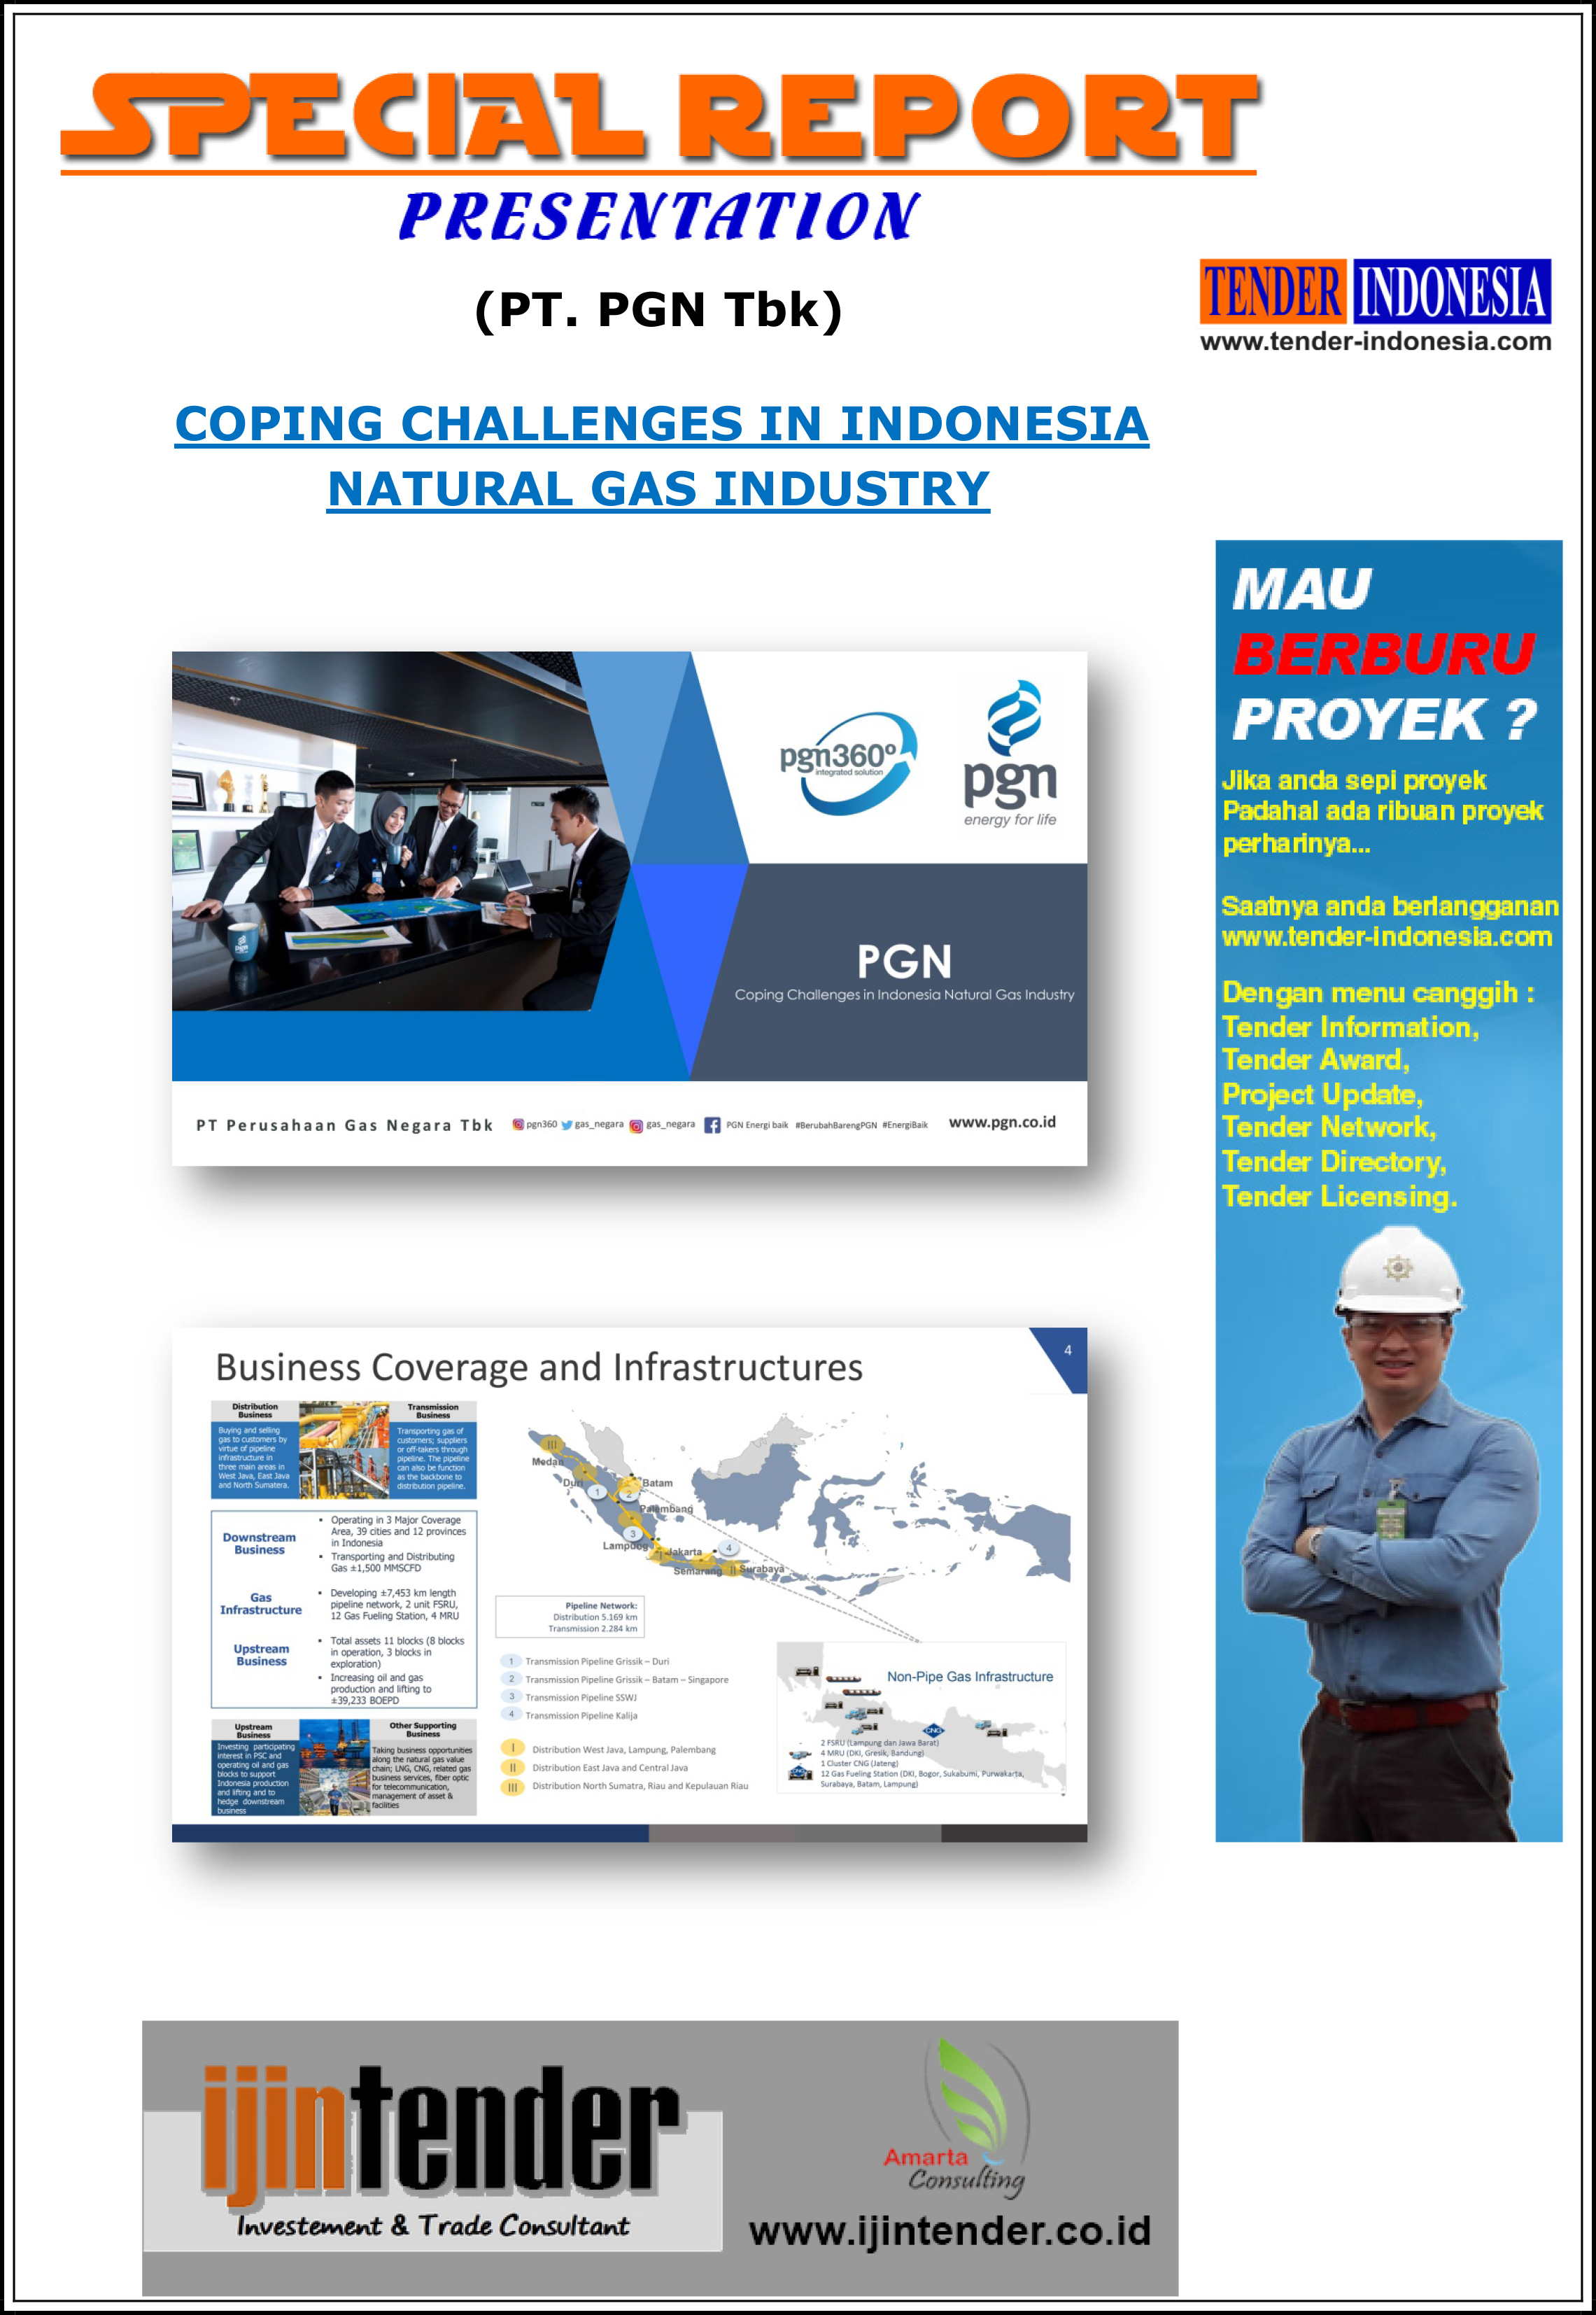 SPECIAL REPORT PRESENTATION INDONESIA - Edisi 15 Mei 2018 dari PT. PGN Tbk